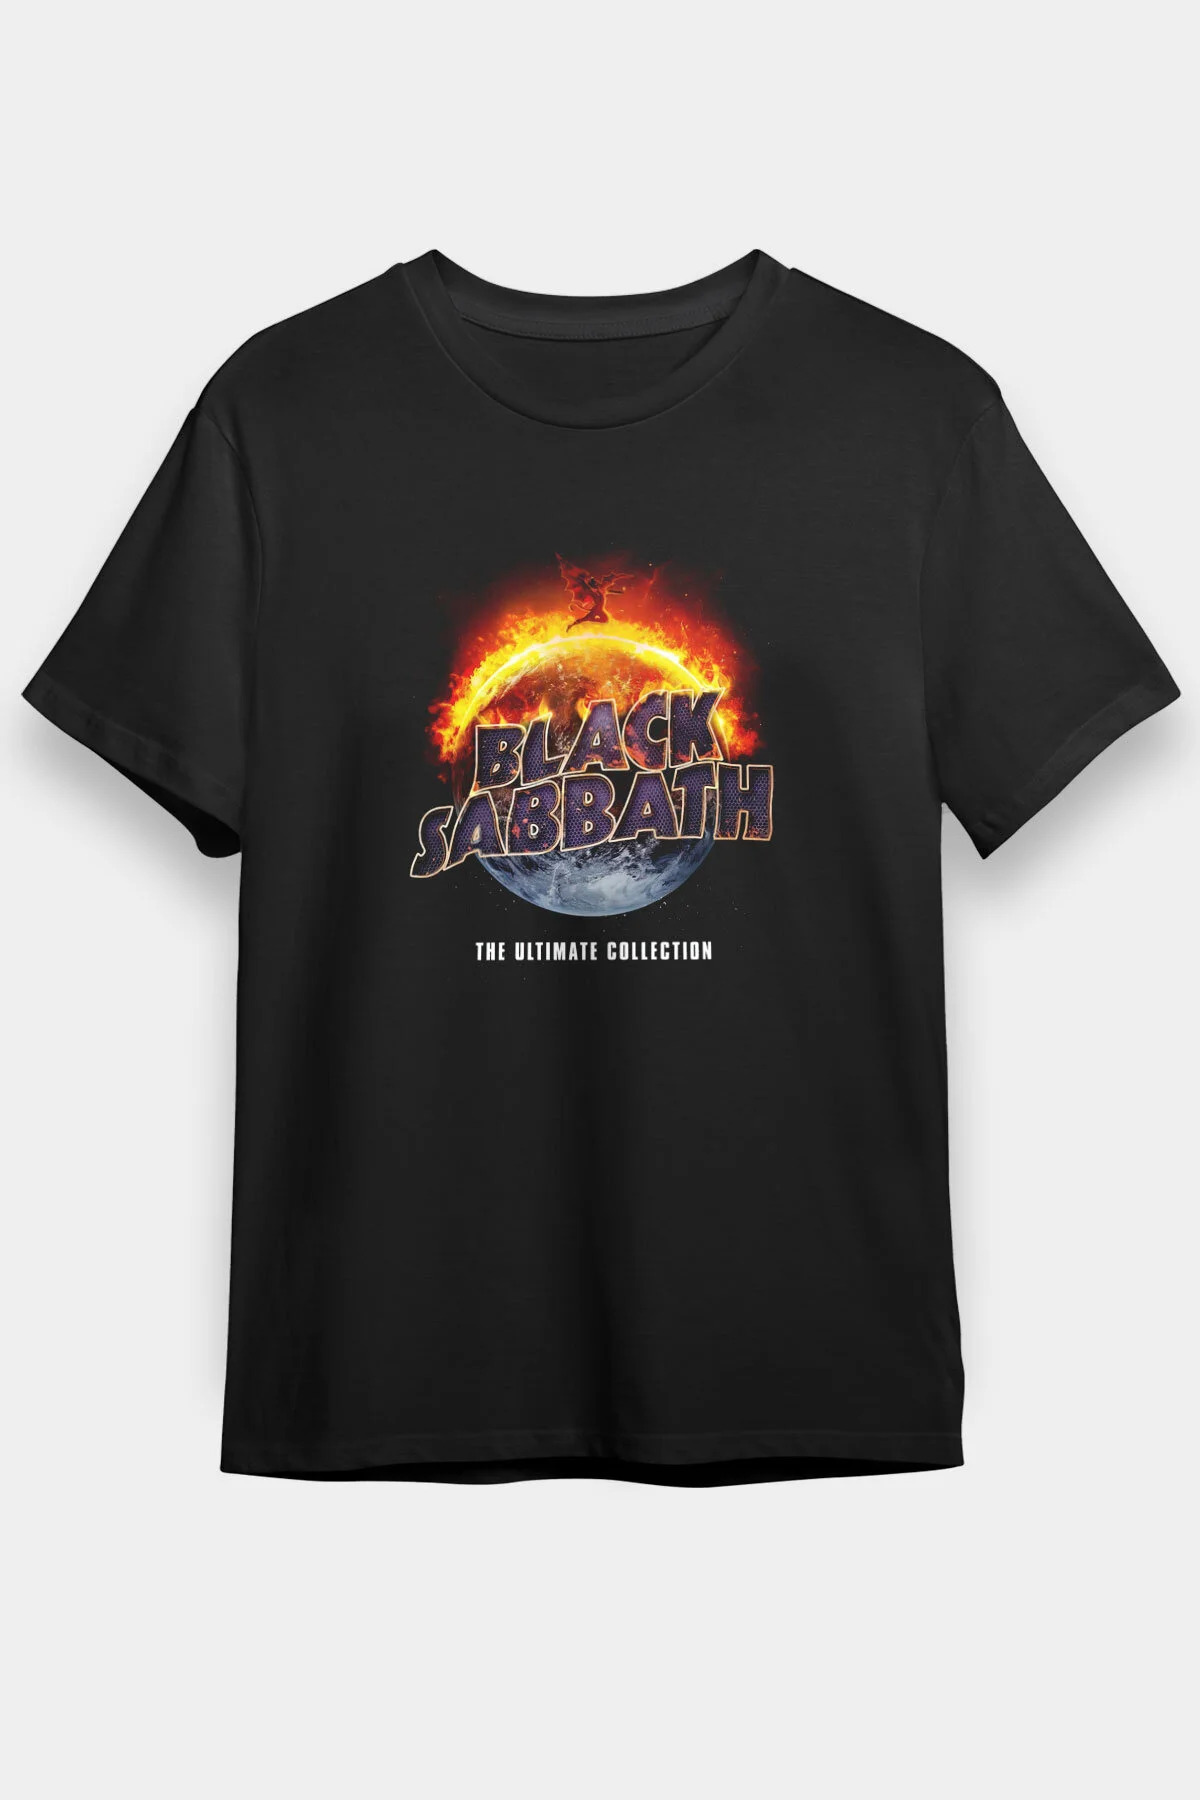 Black Sabbath ,Rock Music Band ,Unisex Tshirt 51